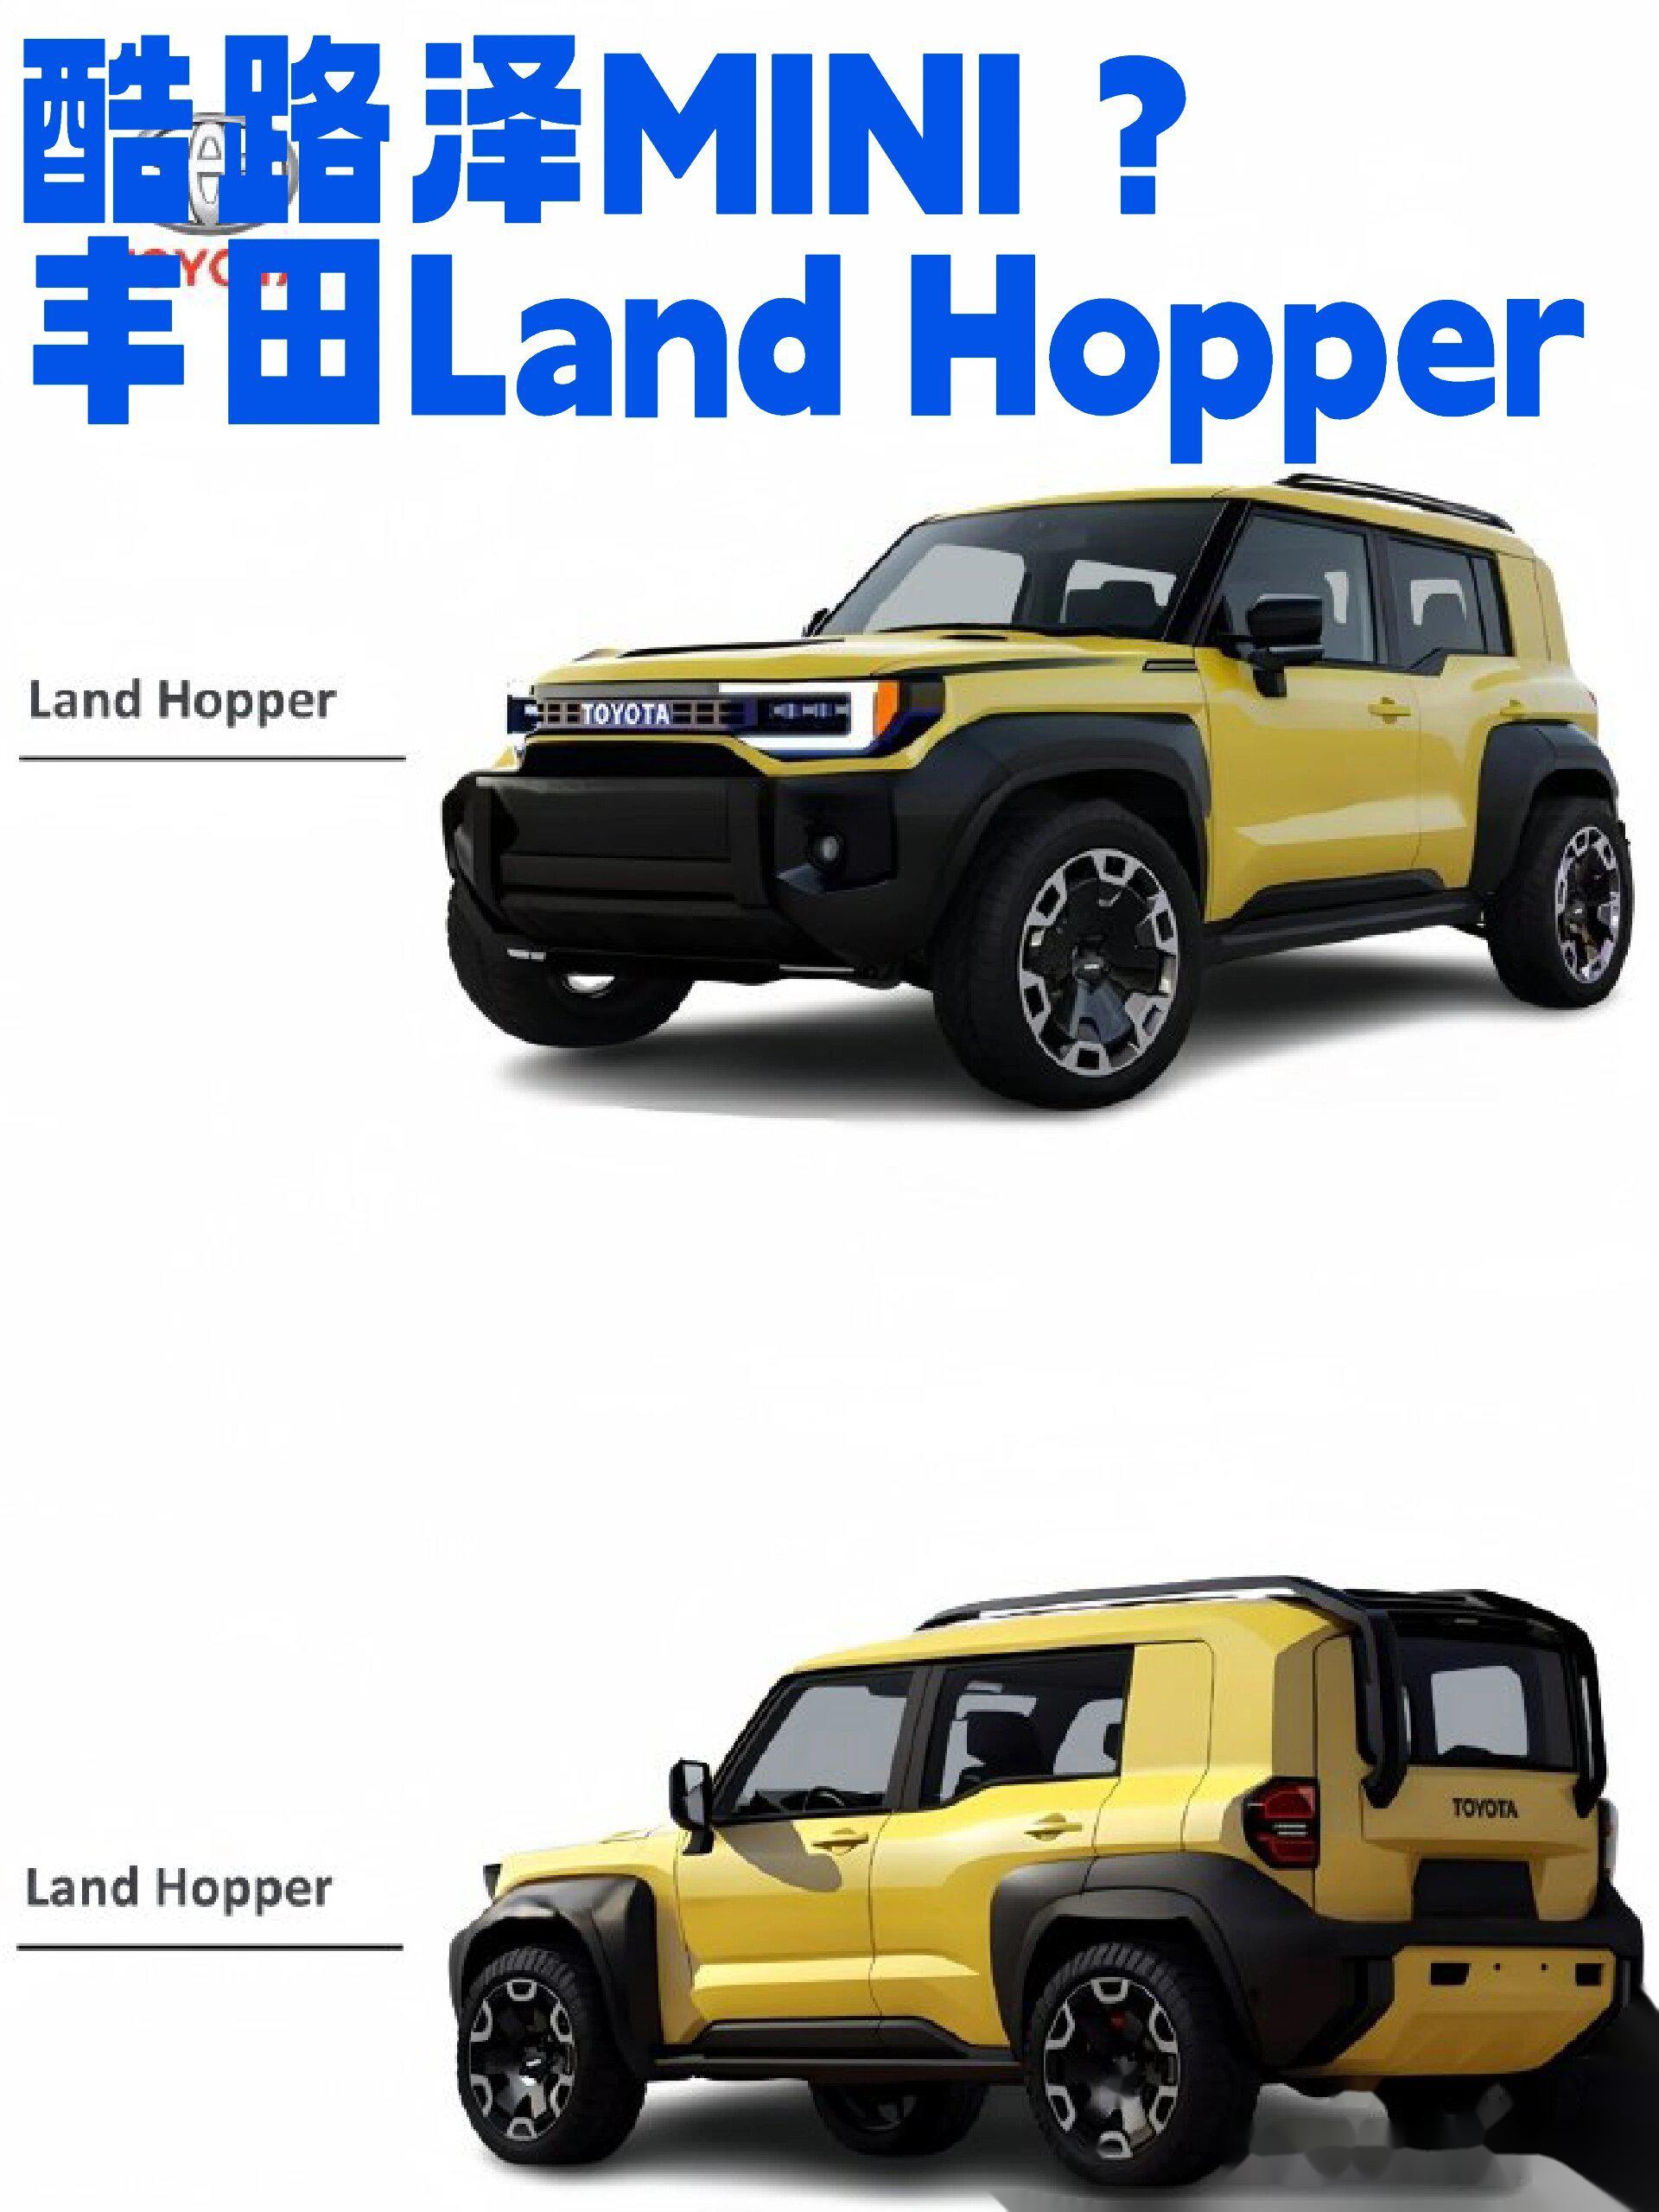 mini版兰德酷路泽—land hopper 丰田已经决定推出一款小型硬派越野车